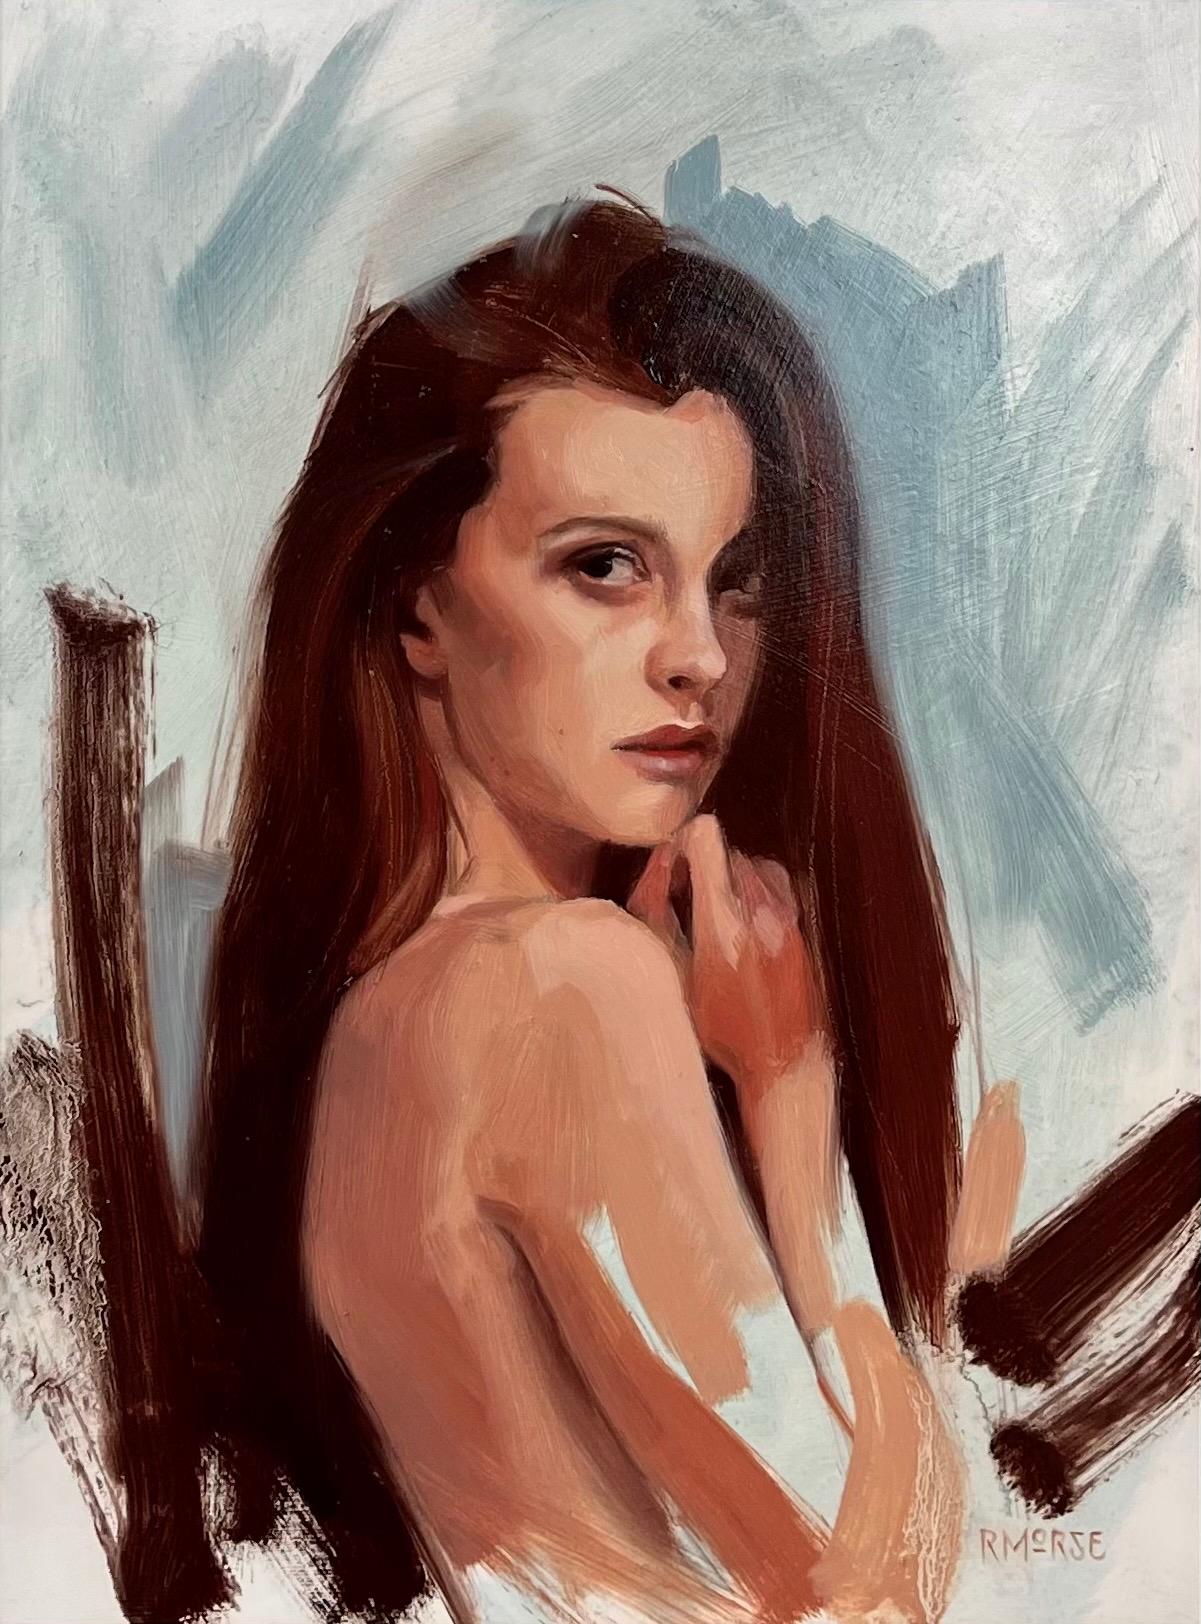 Ryan Morse Nude Painting - "Looking Back, " Oil Painting